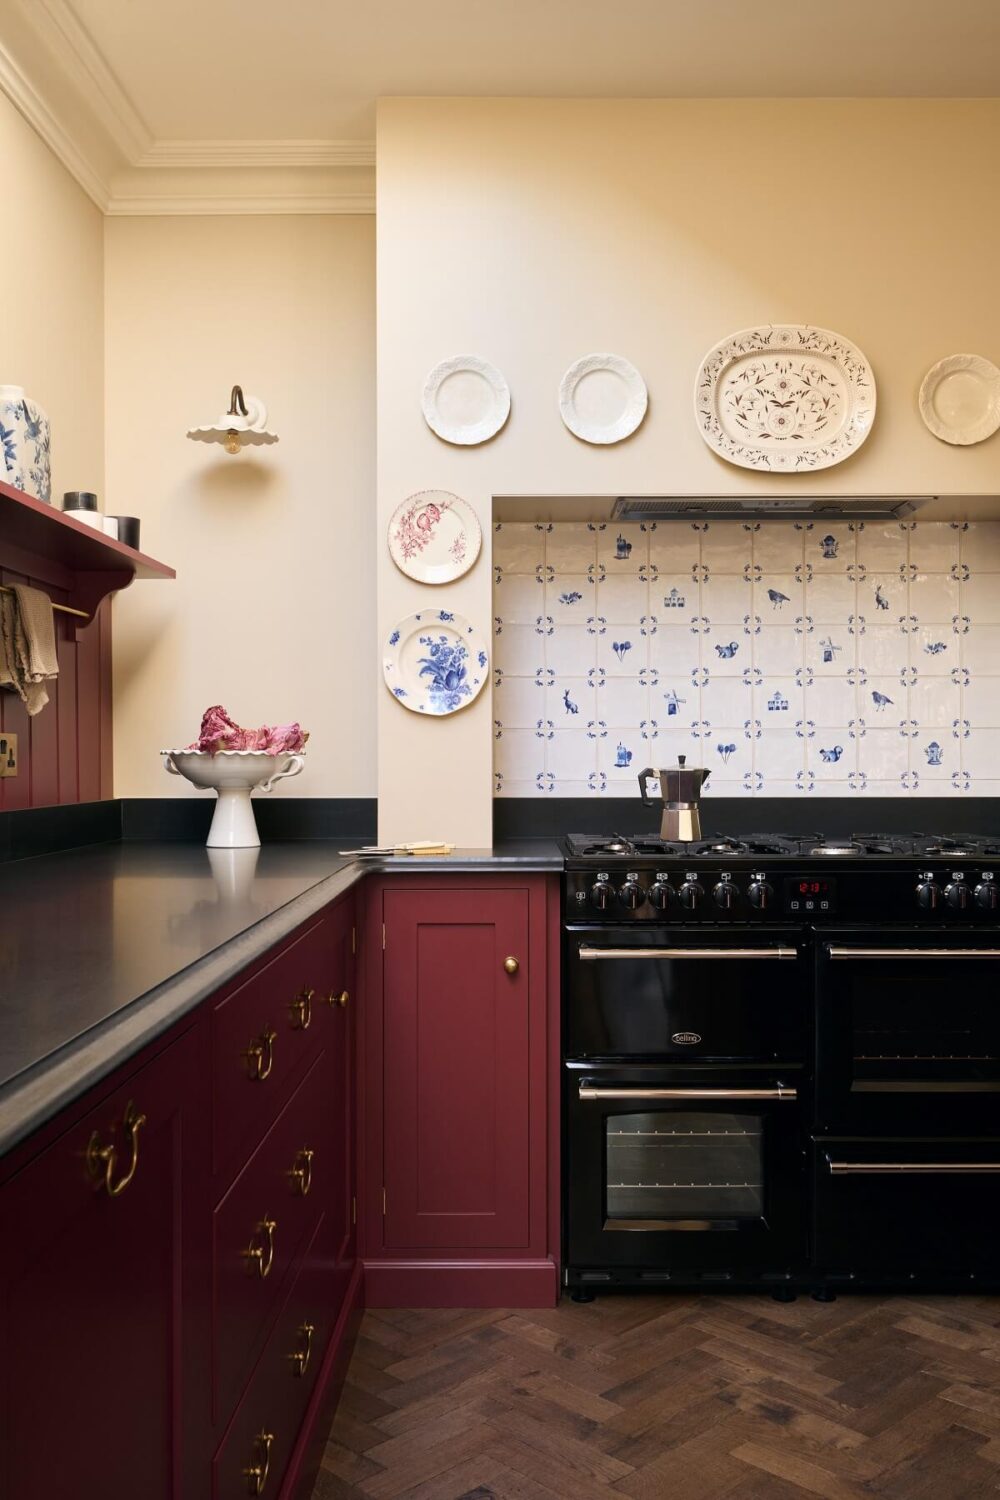 real-shaker-kitchen-devol-refectory-red-cabinets-delft-blue-tiles-cooker-nordroom